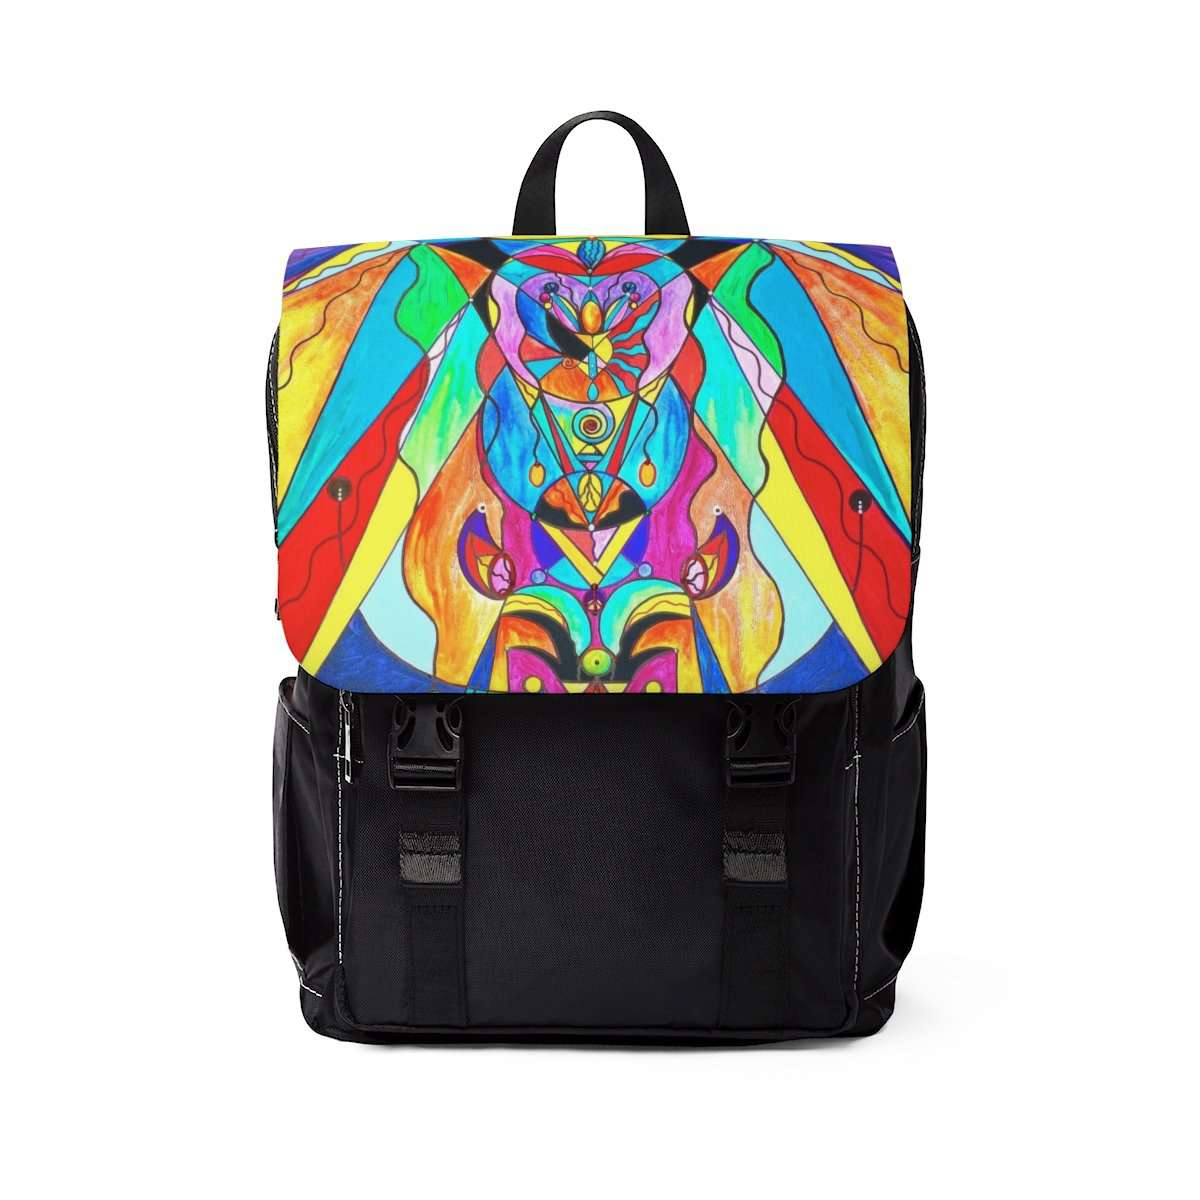 get-your-dream-of-arcturian-metamorphosis-grid-unisex-casual-shoulder-backpack-fashion_0.jpg